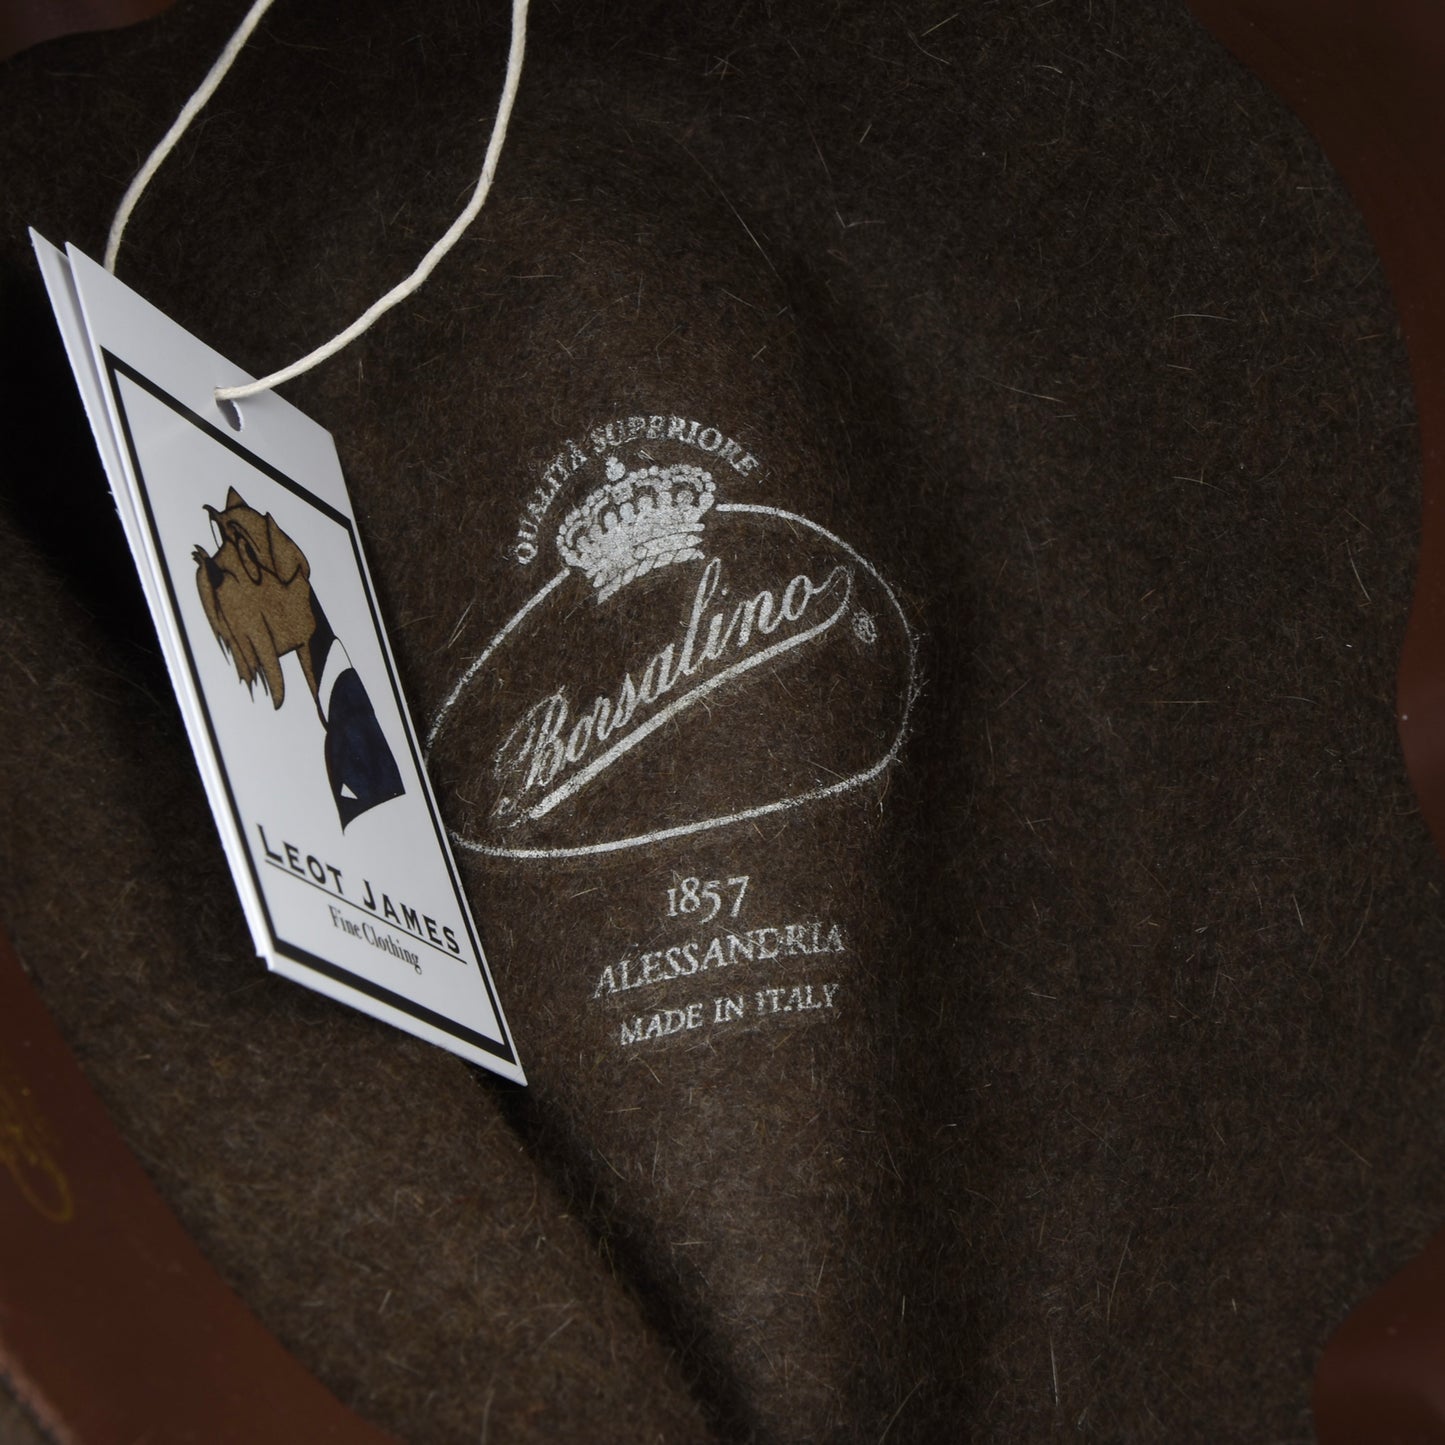 Borsalino Unlined Felt Hat 6cm Brim Size 59 - Brown